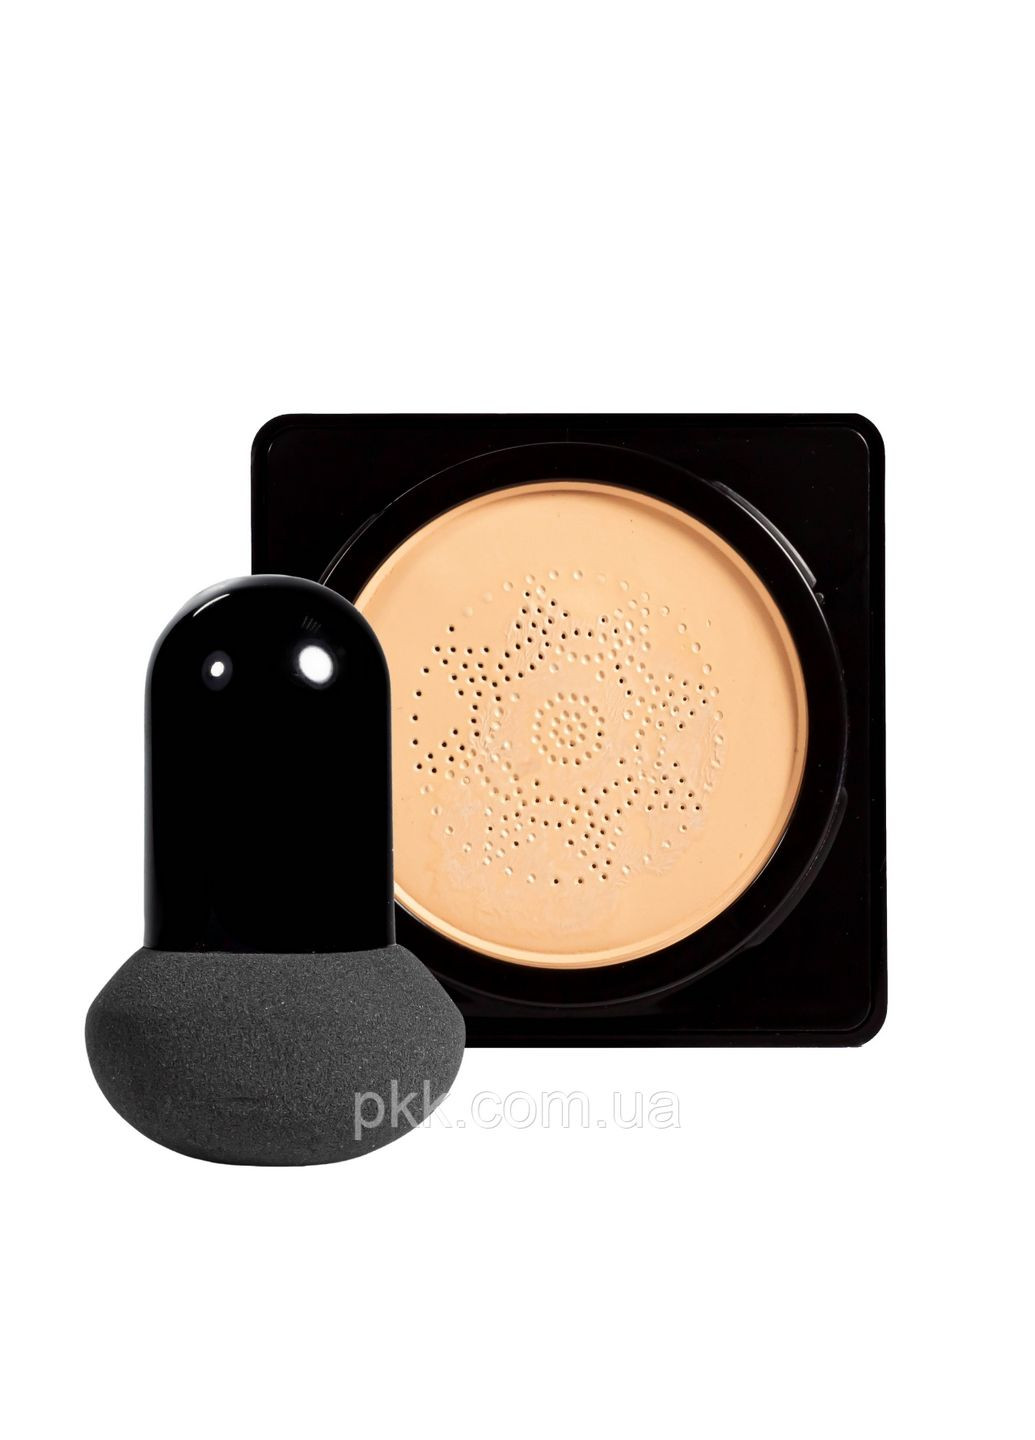 Кушон консилер для макияжа Moisture Beauty Cream Cushion Images (288136665)